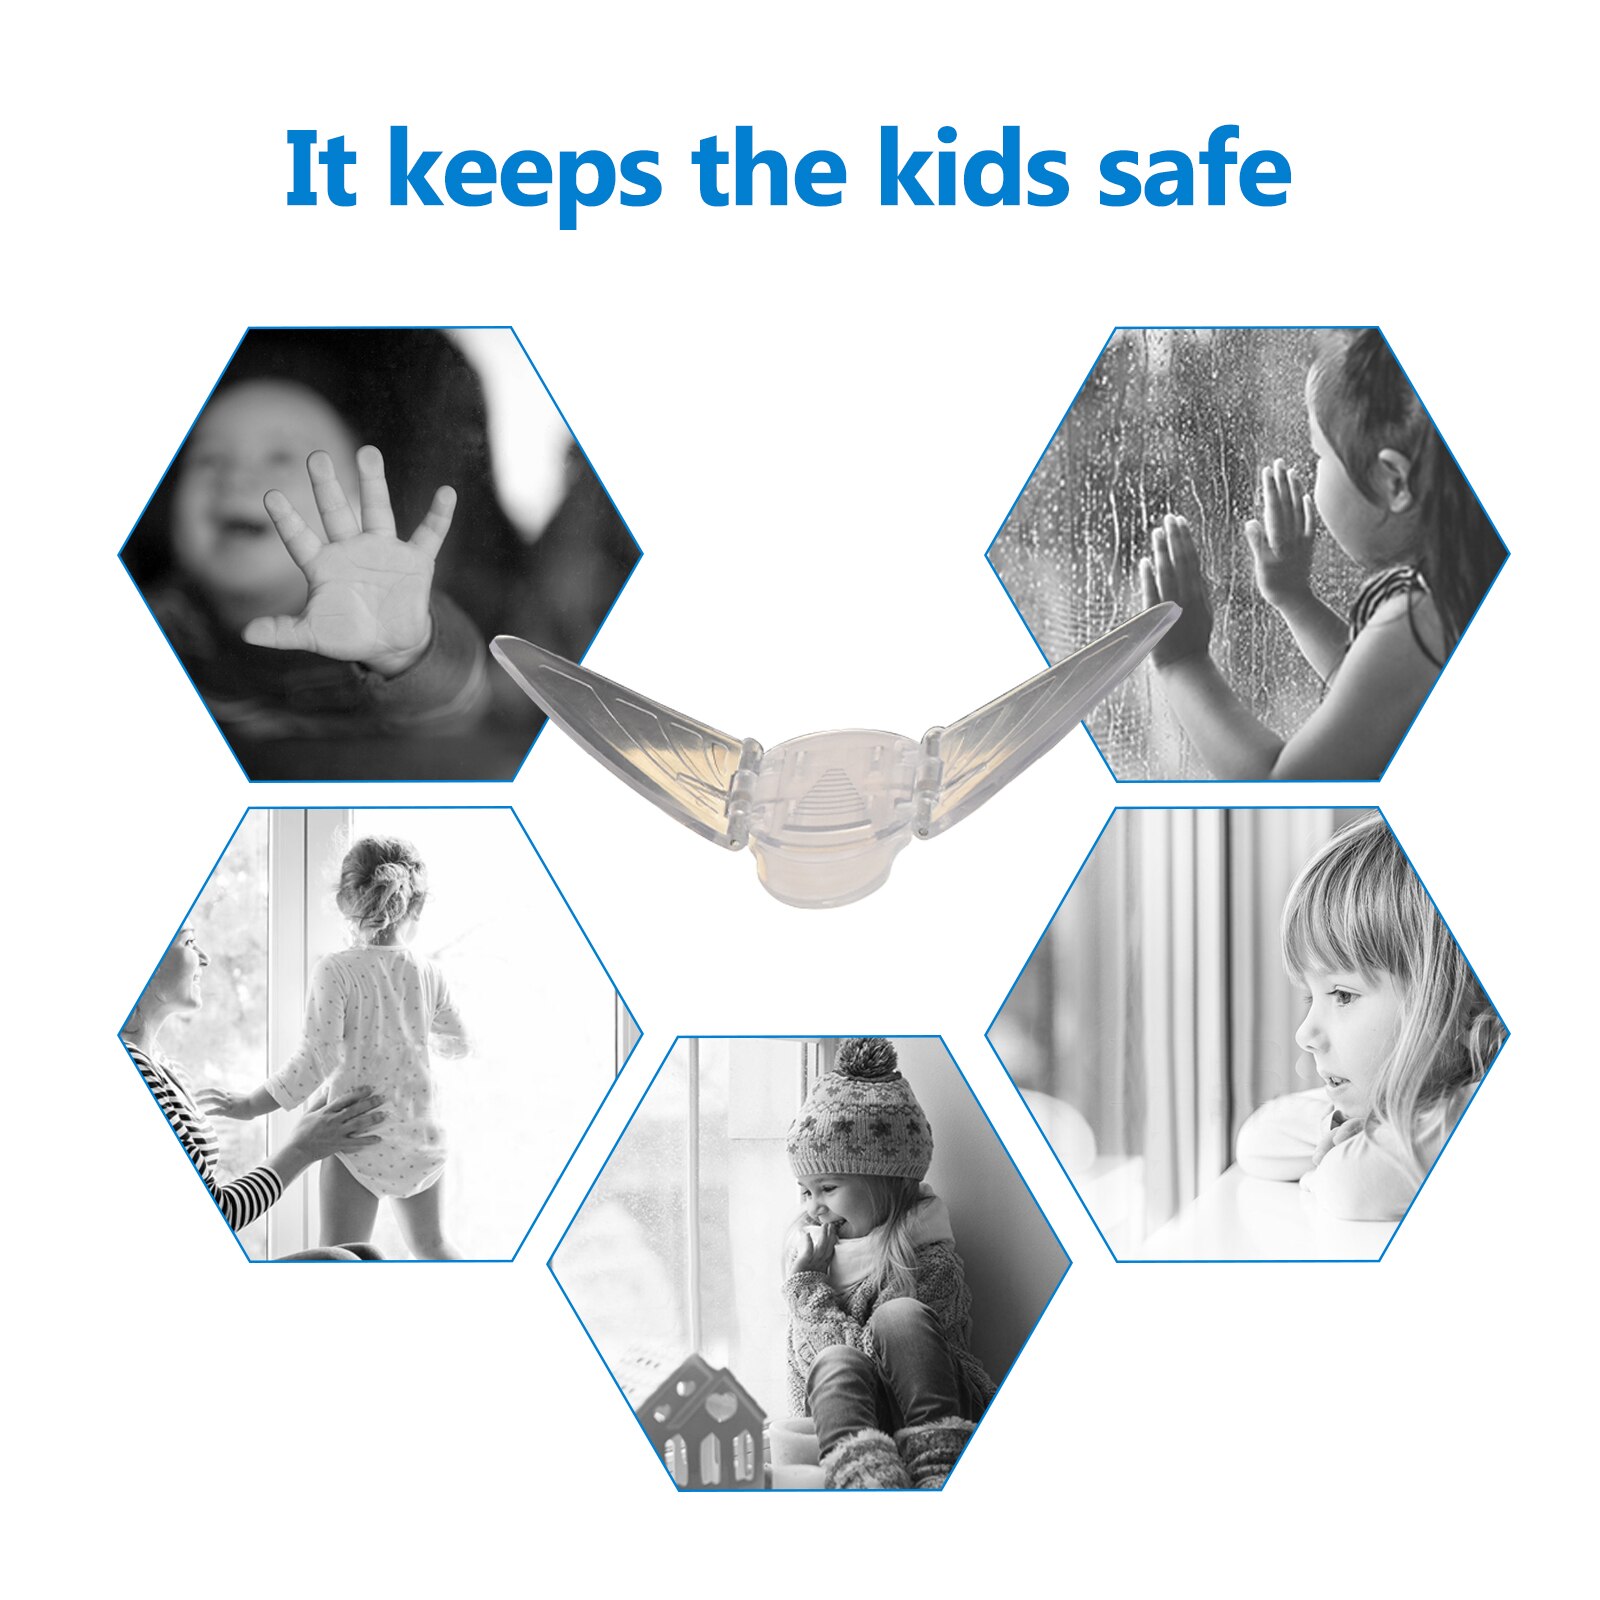 Children Safety Child Lock Child Safe Locks Easy Kids Baby Safety Security Sliding Window Locks For Push-pull Door